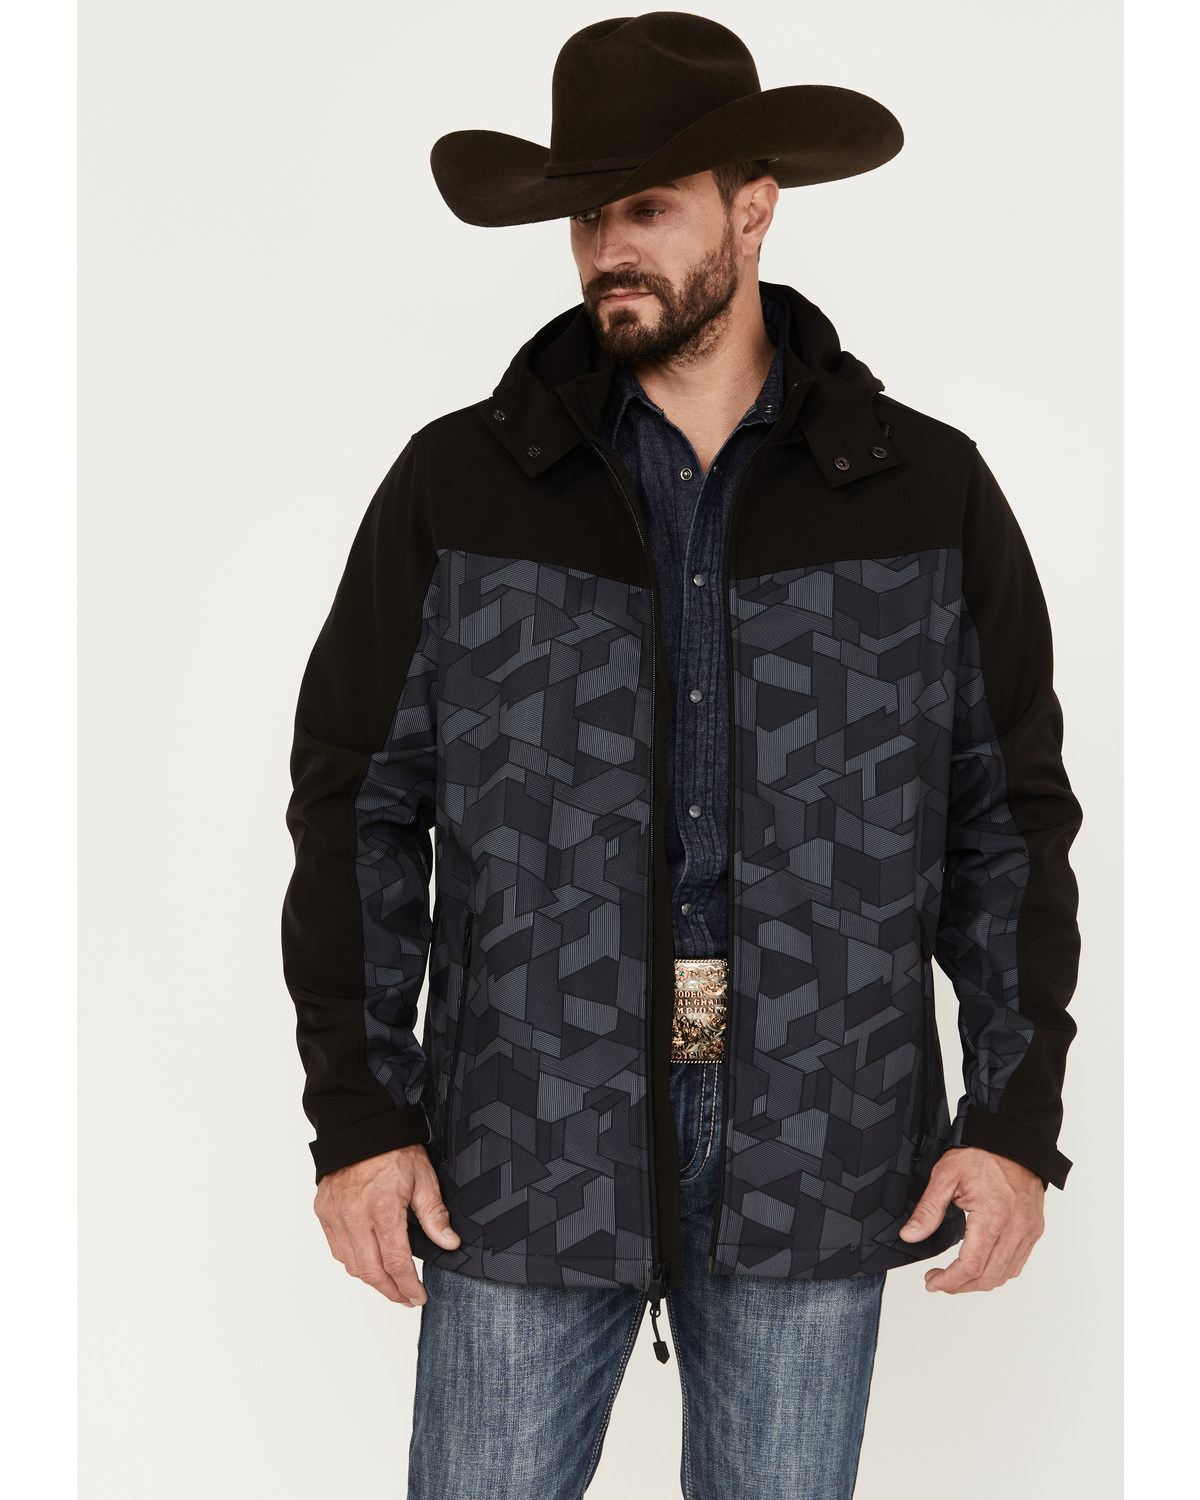 RANK 45® Men's Barrier Hooded Softshell Jacket